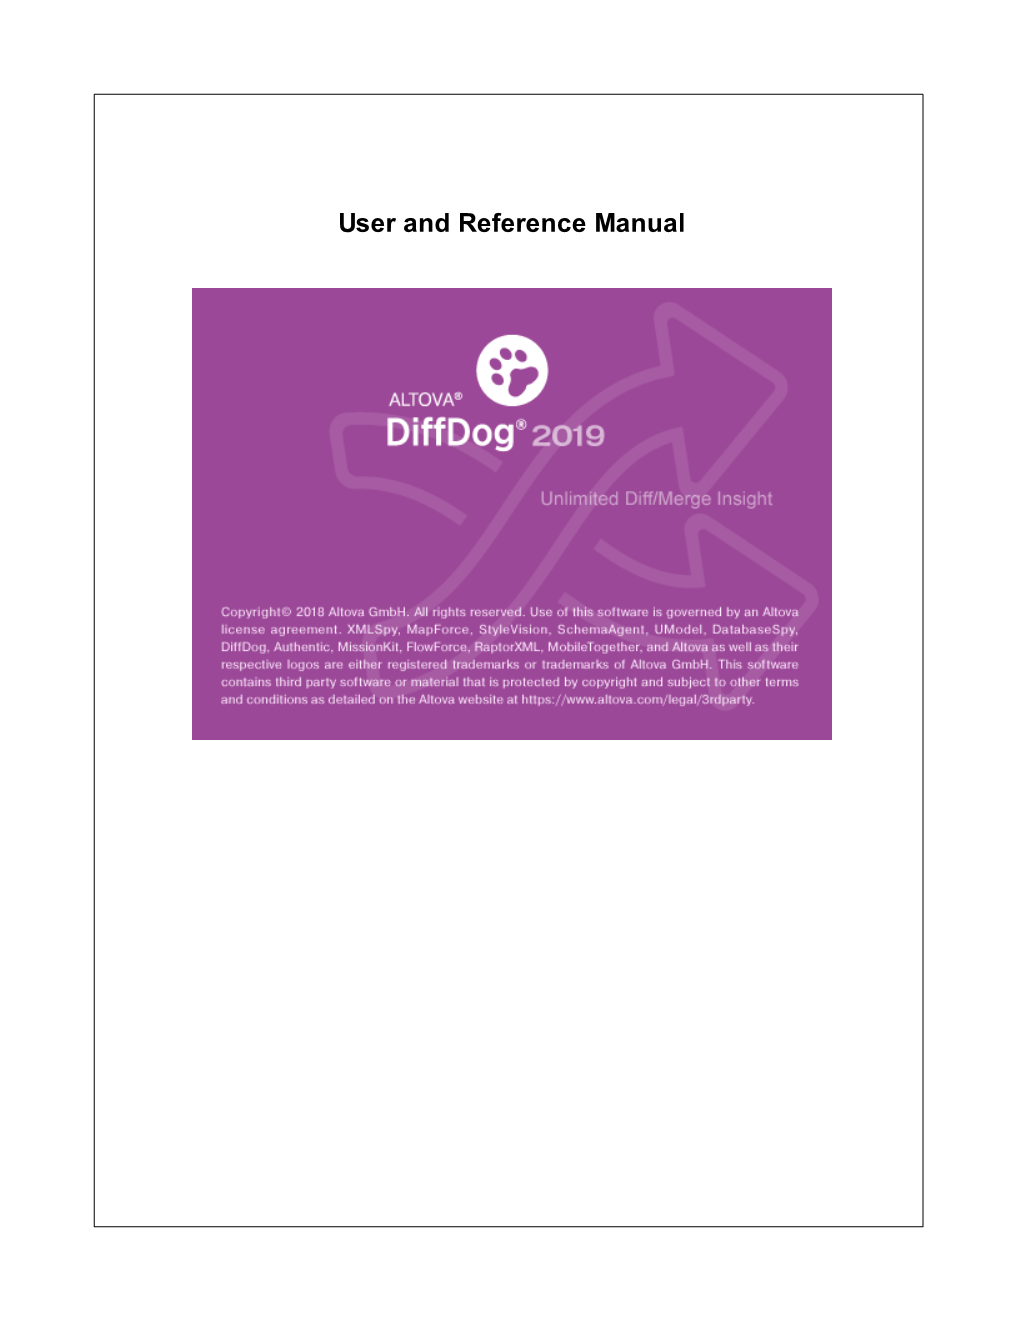 Altova Diffdog 2019 User & Reference Manual